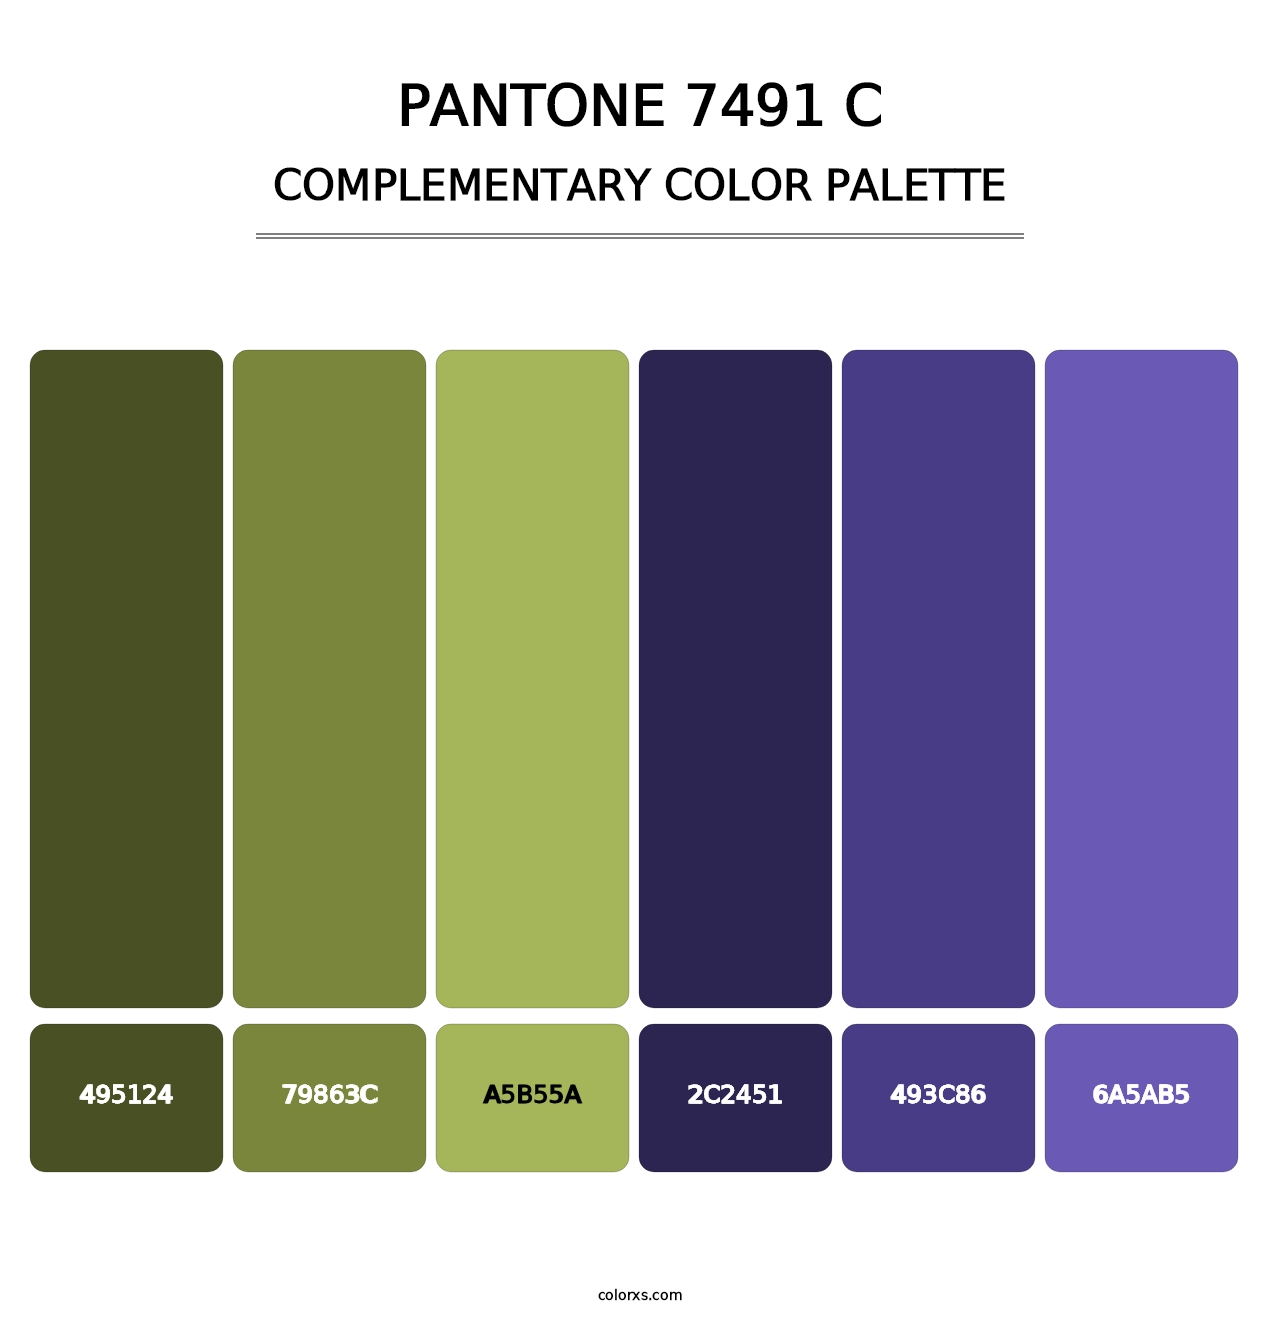 PANTONE 7491 C - Complementary Color Palette